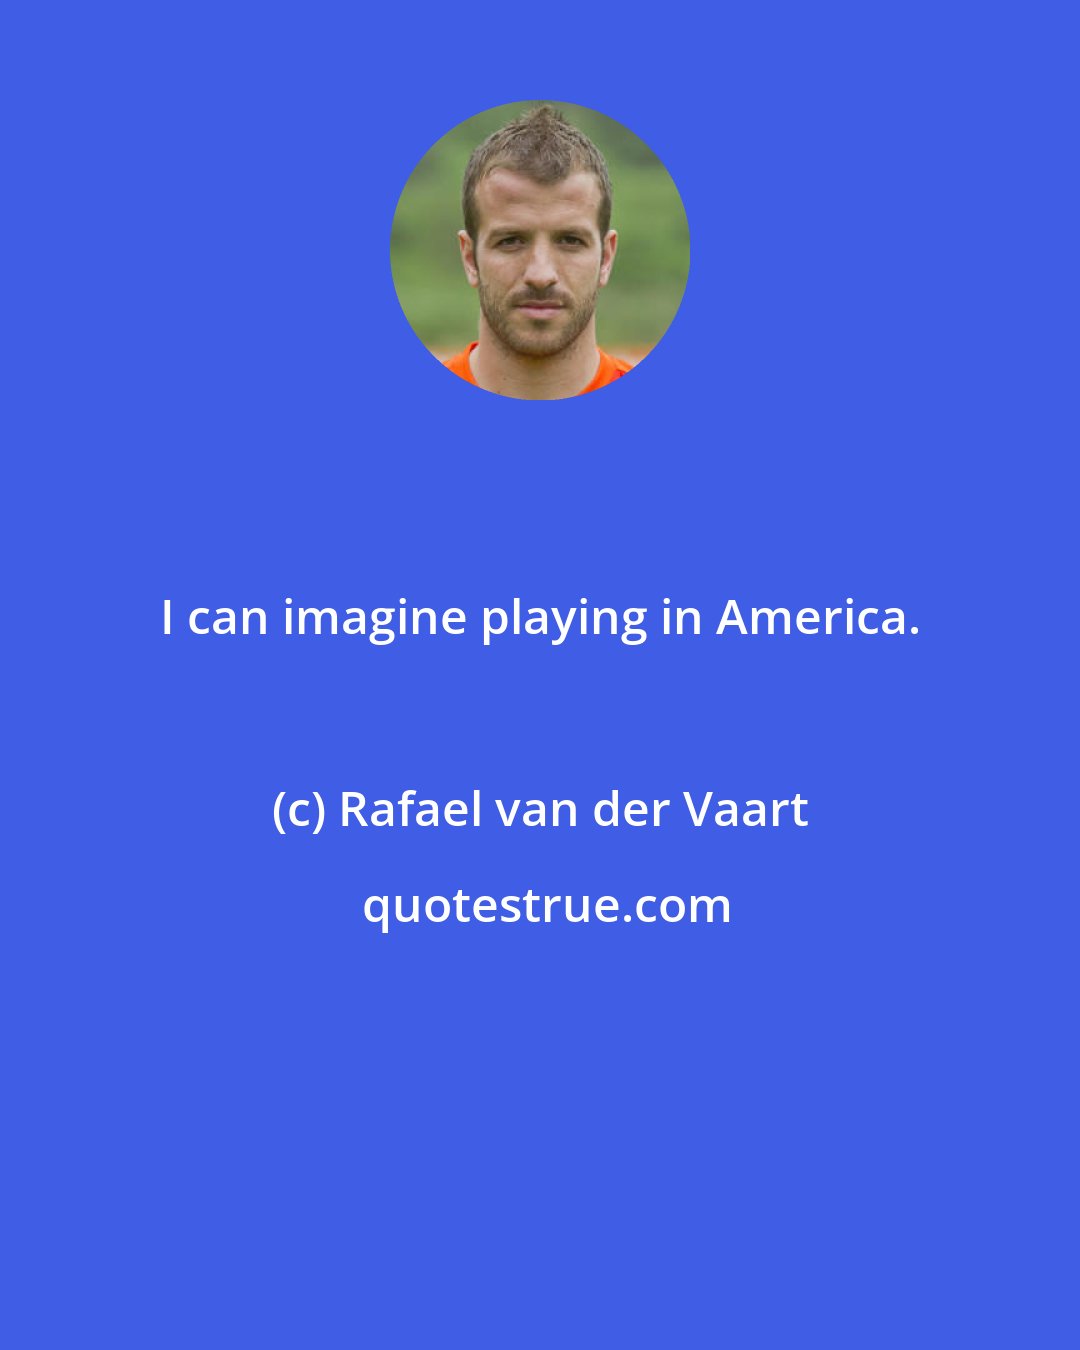 Rafael van der Vaart: I can imagine playing in America.